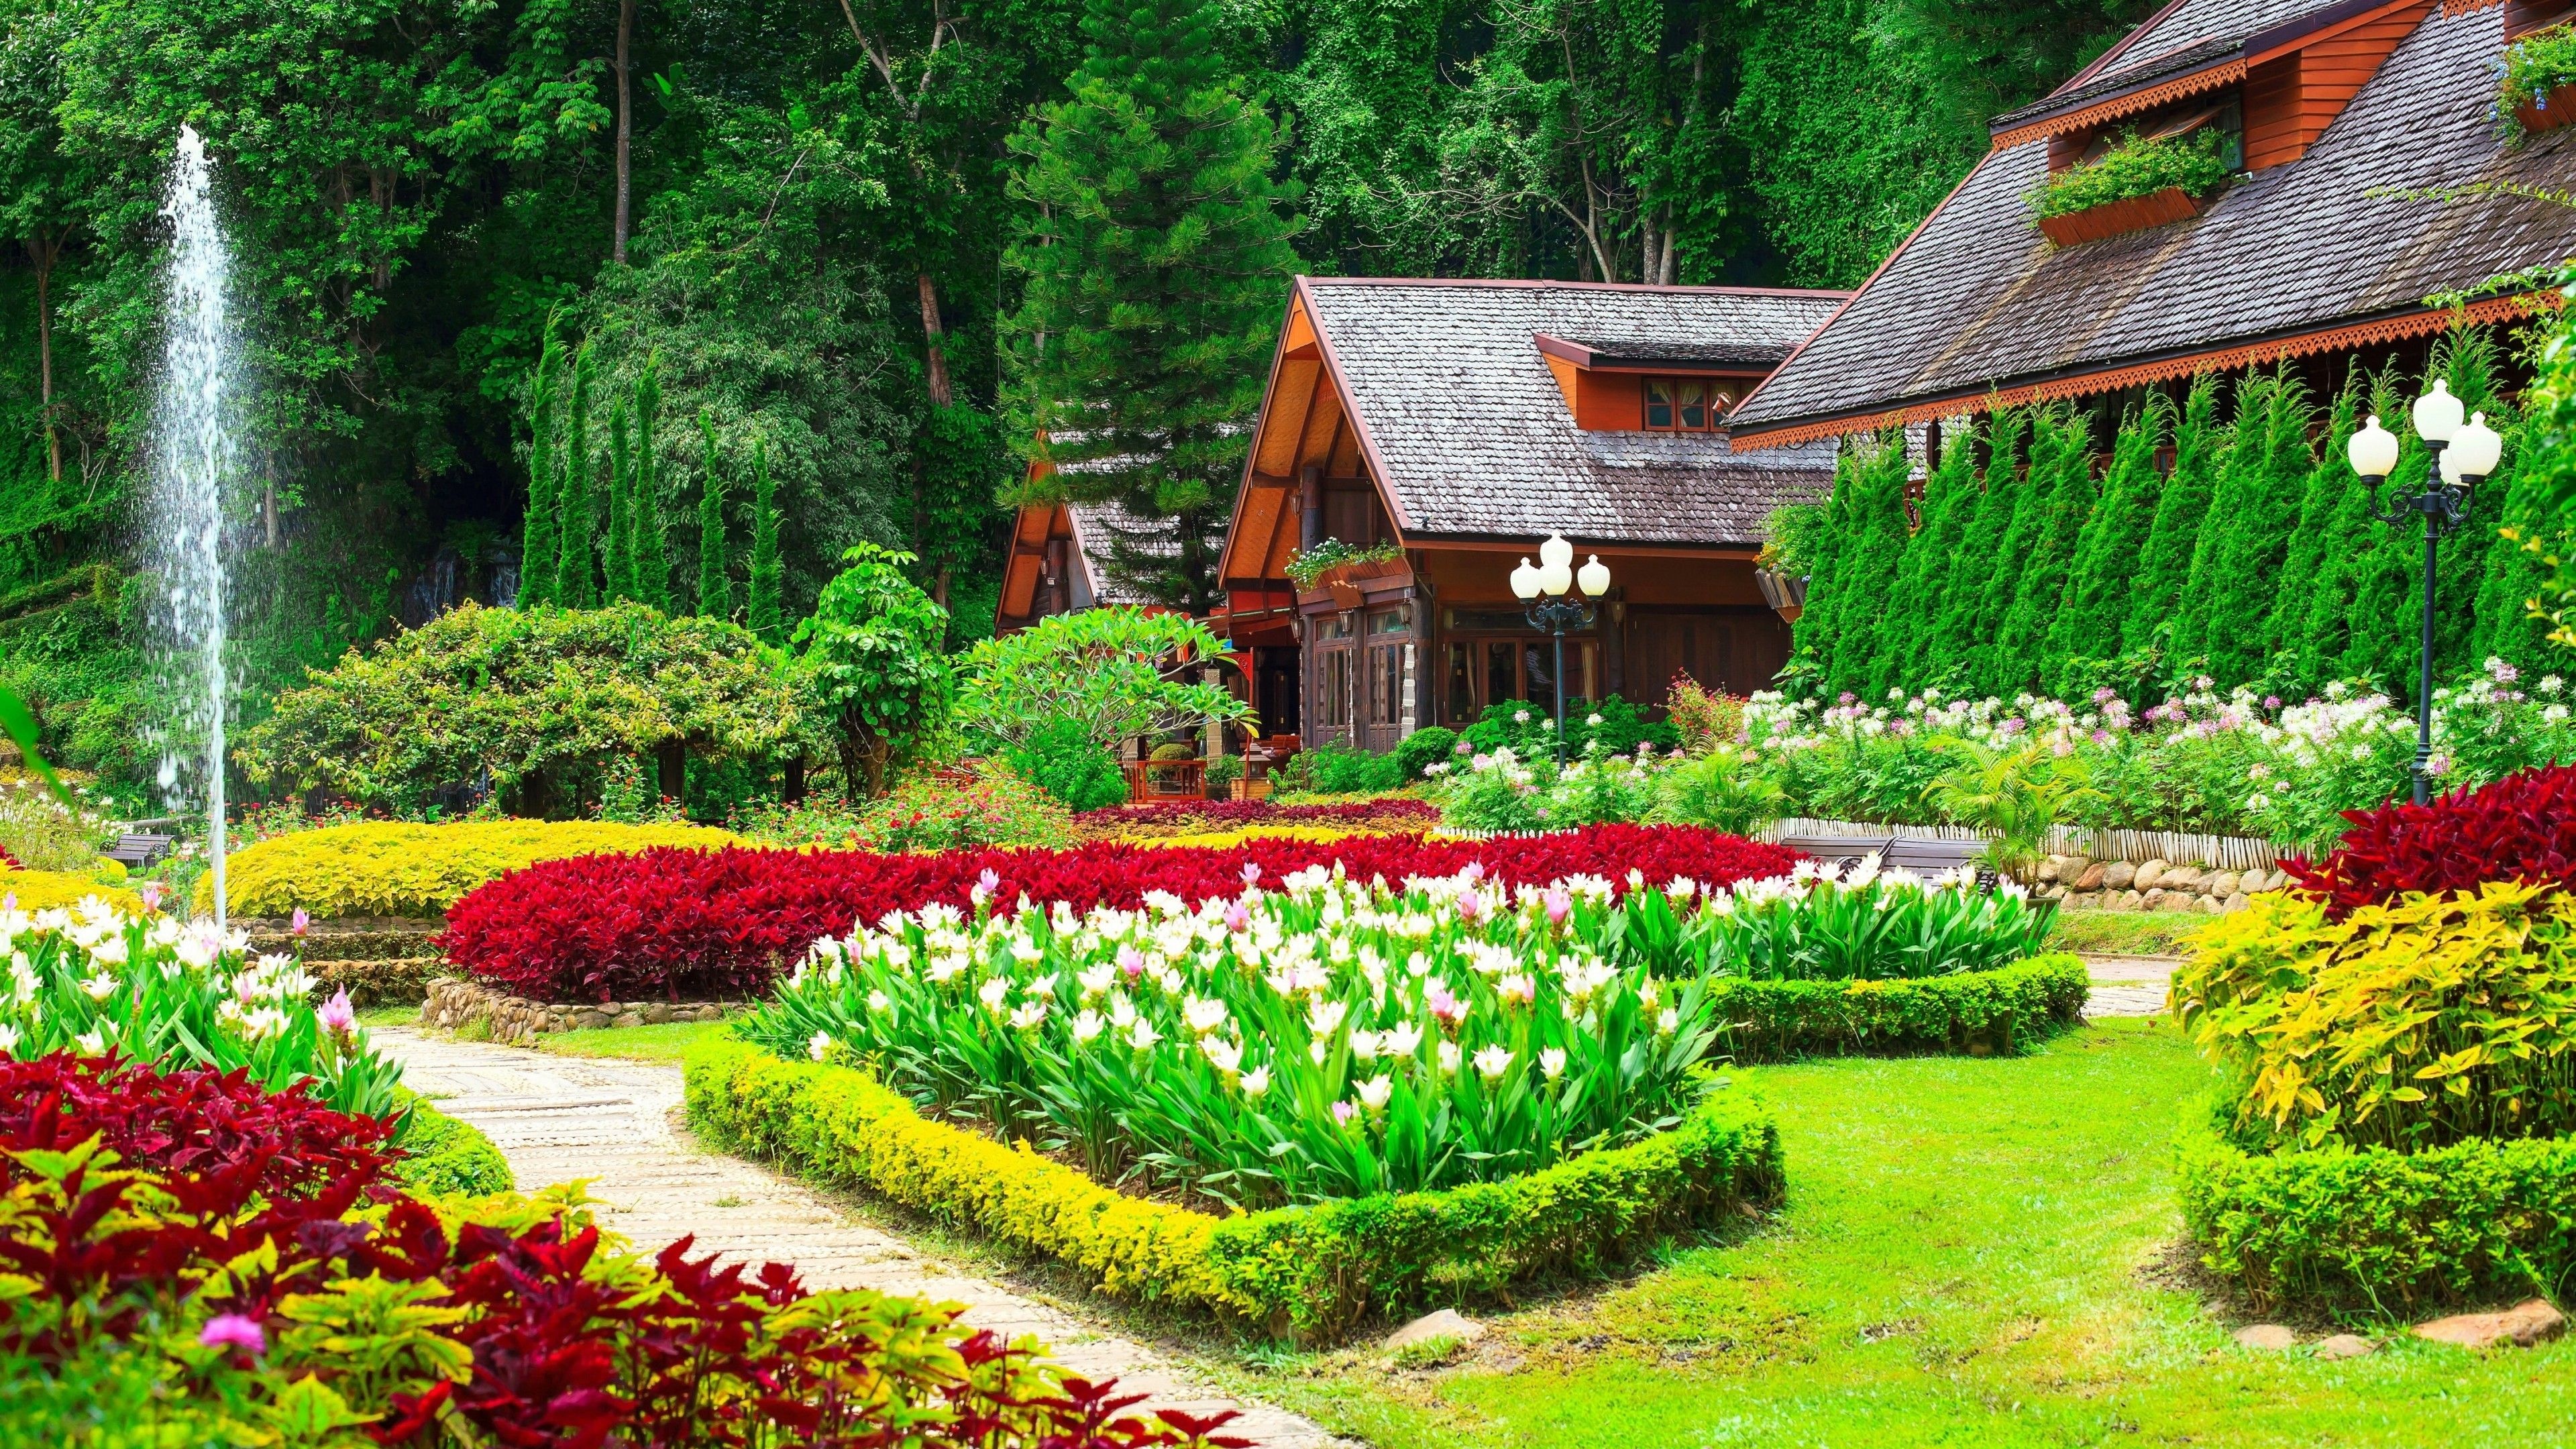 Enchanting flower house, Botanical beauty, Nature's paradise, Blossoming charm, 3840x2160 4K Desktop